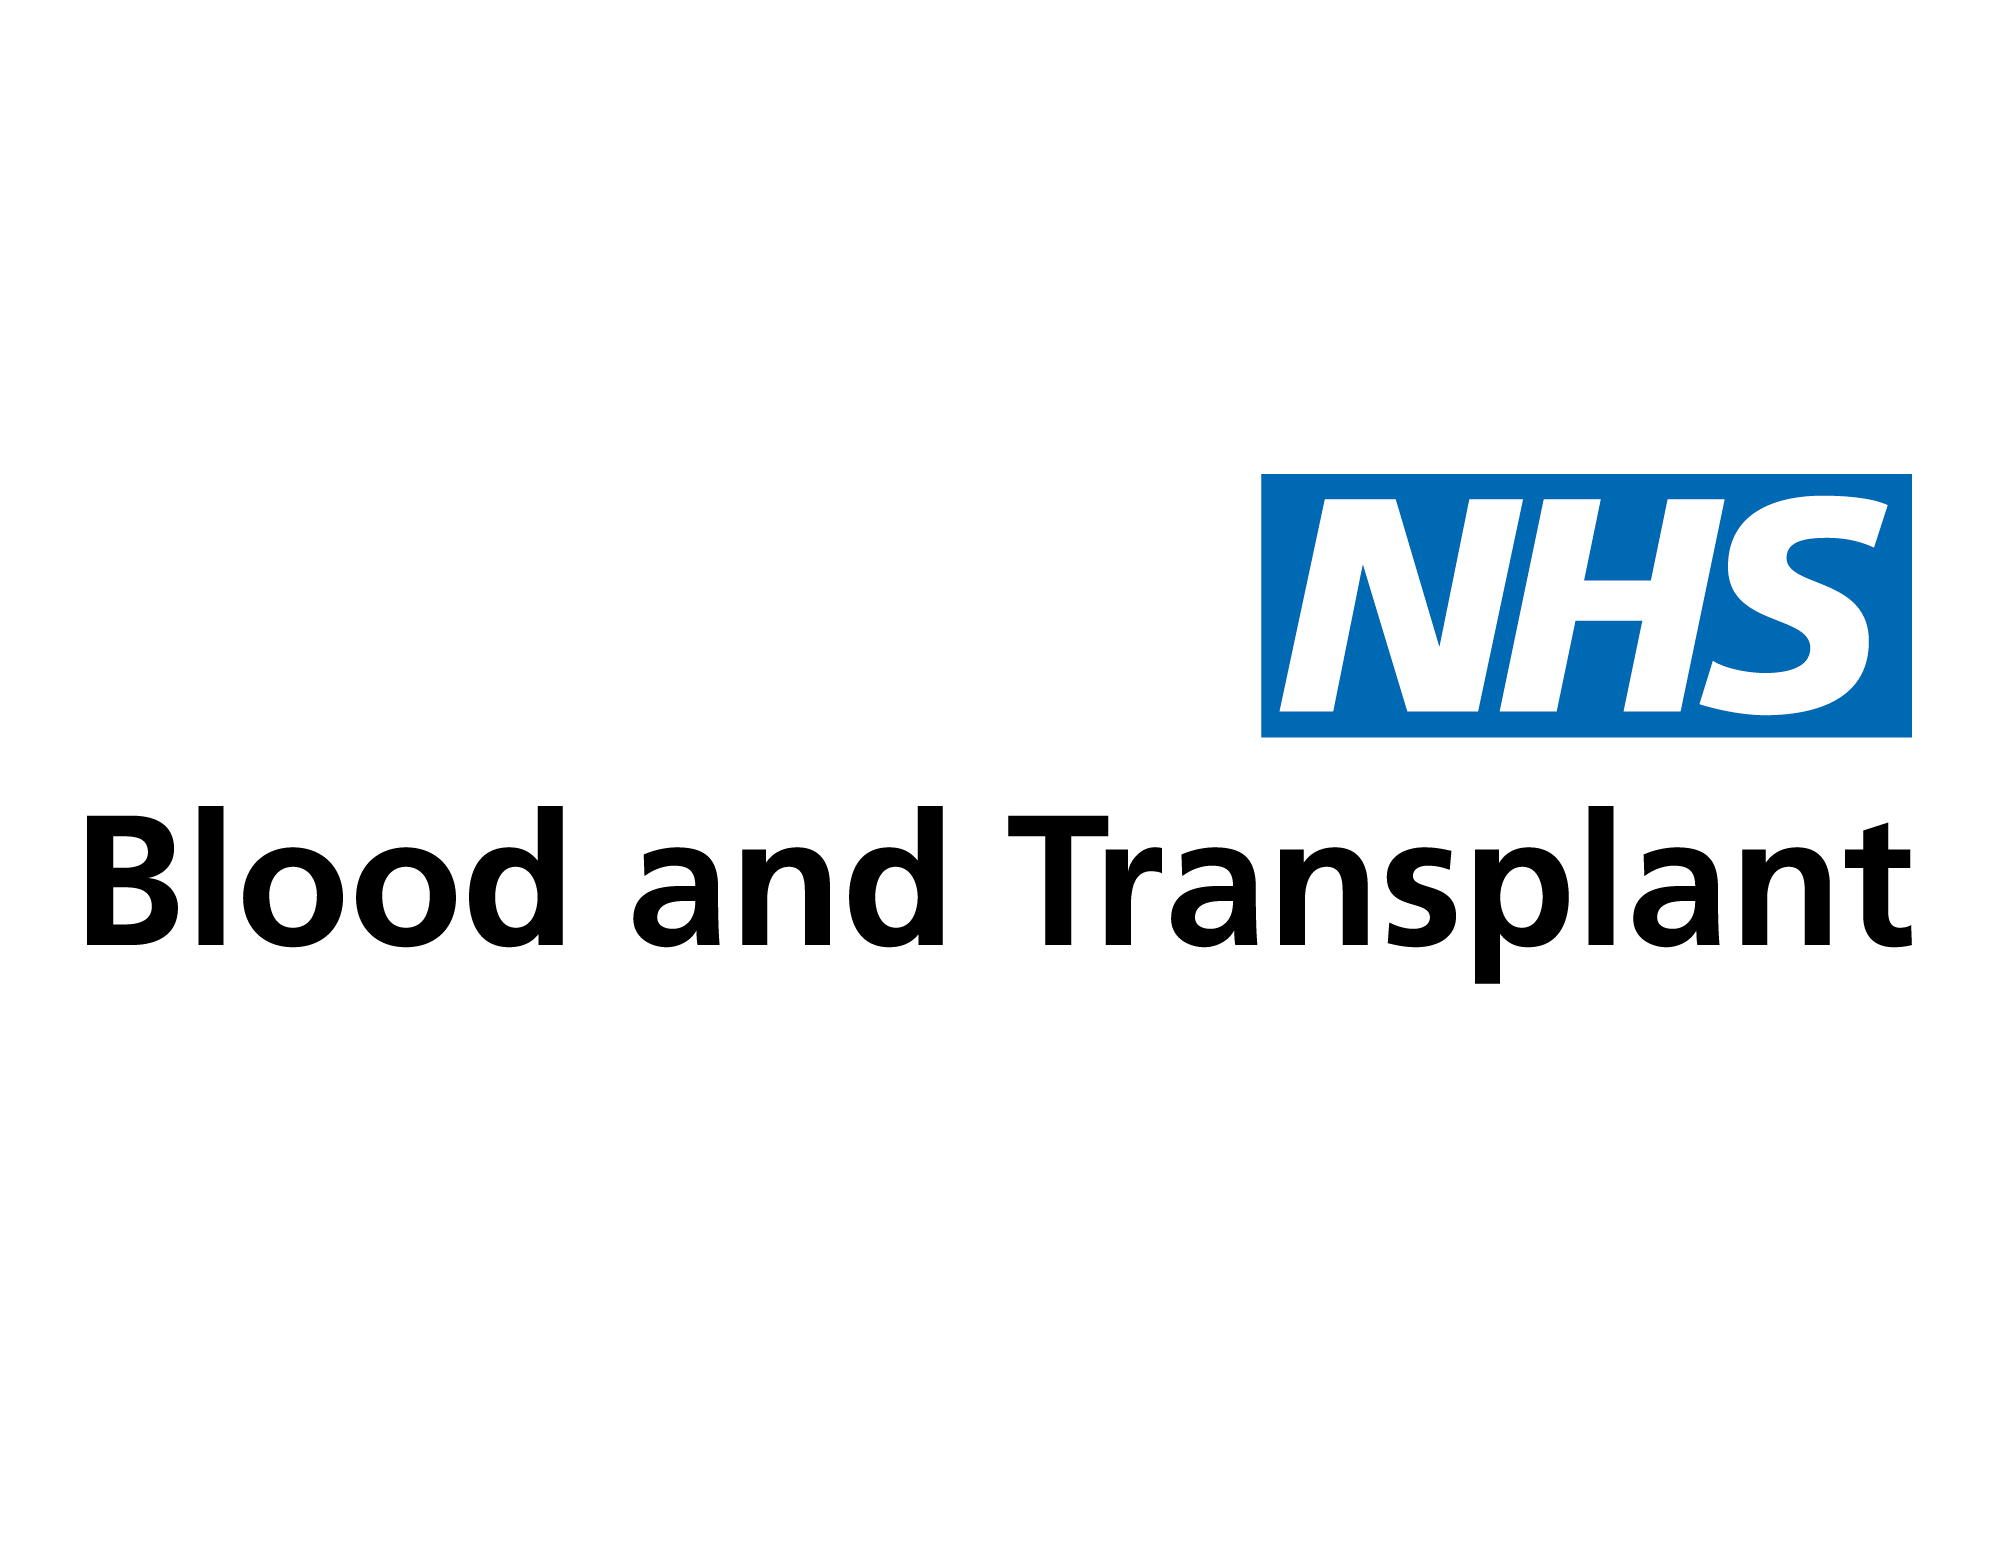 NHS Blood and Transplant for website